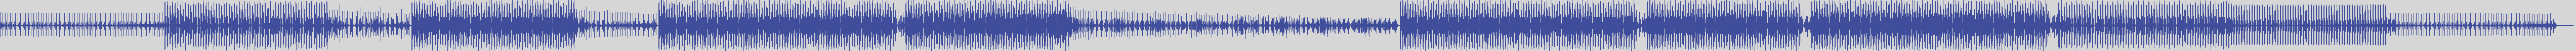 atomic_recordings [AR012] Steve Black - Chiller Floor [Original Mix] audio wave form